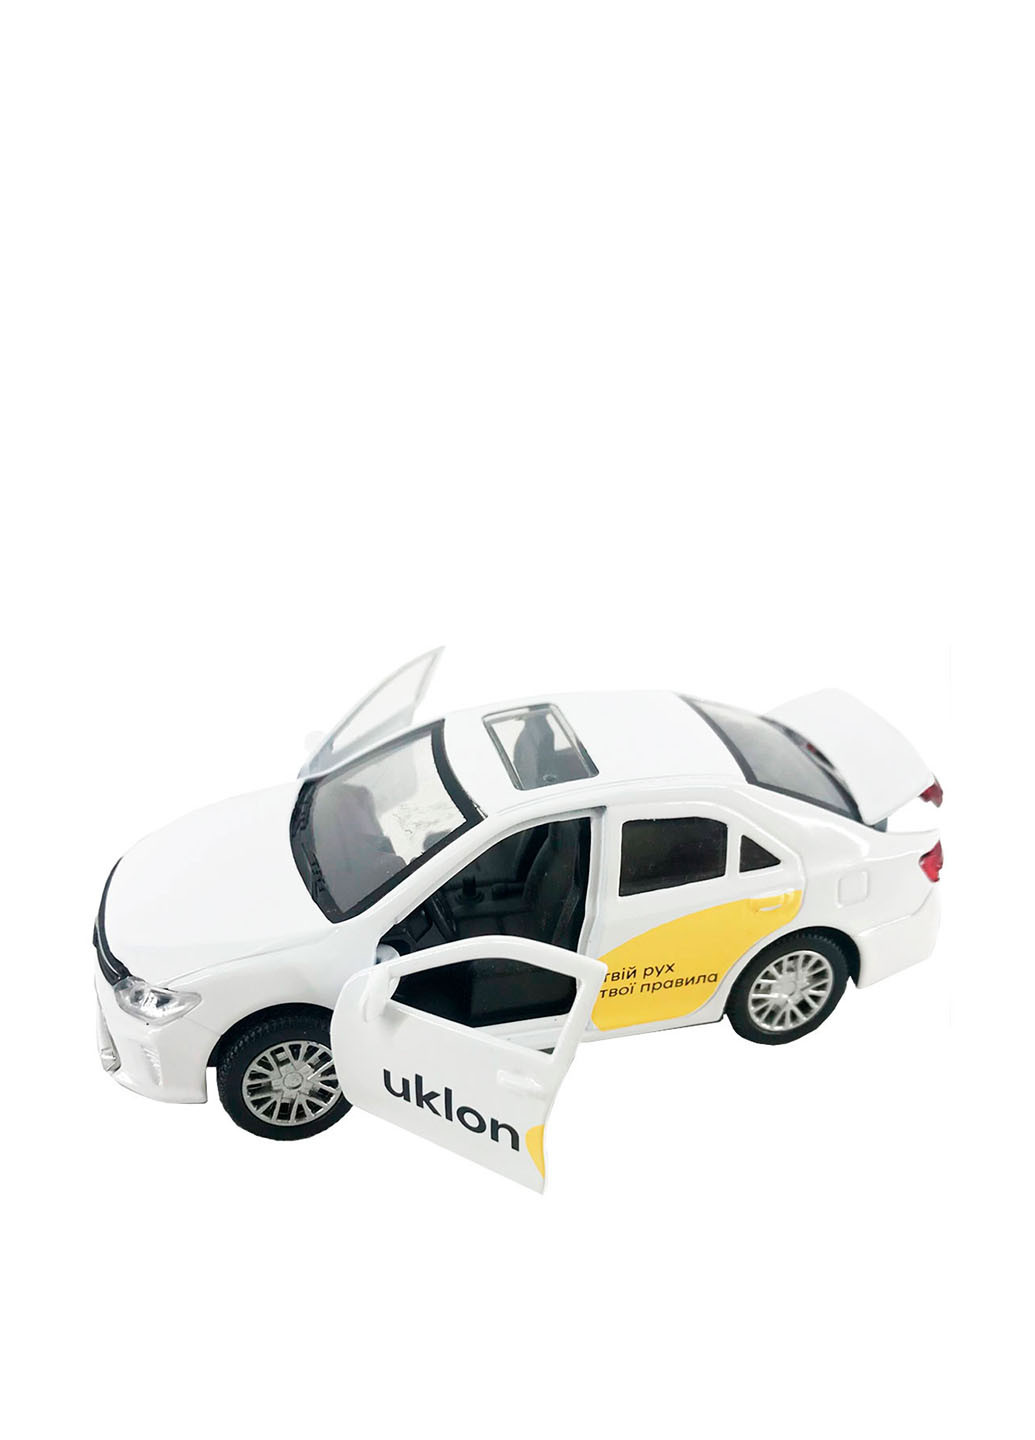 Автомодель таксі Toyota Camry Uklon, 12x3x3 см Technopark (251419143)